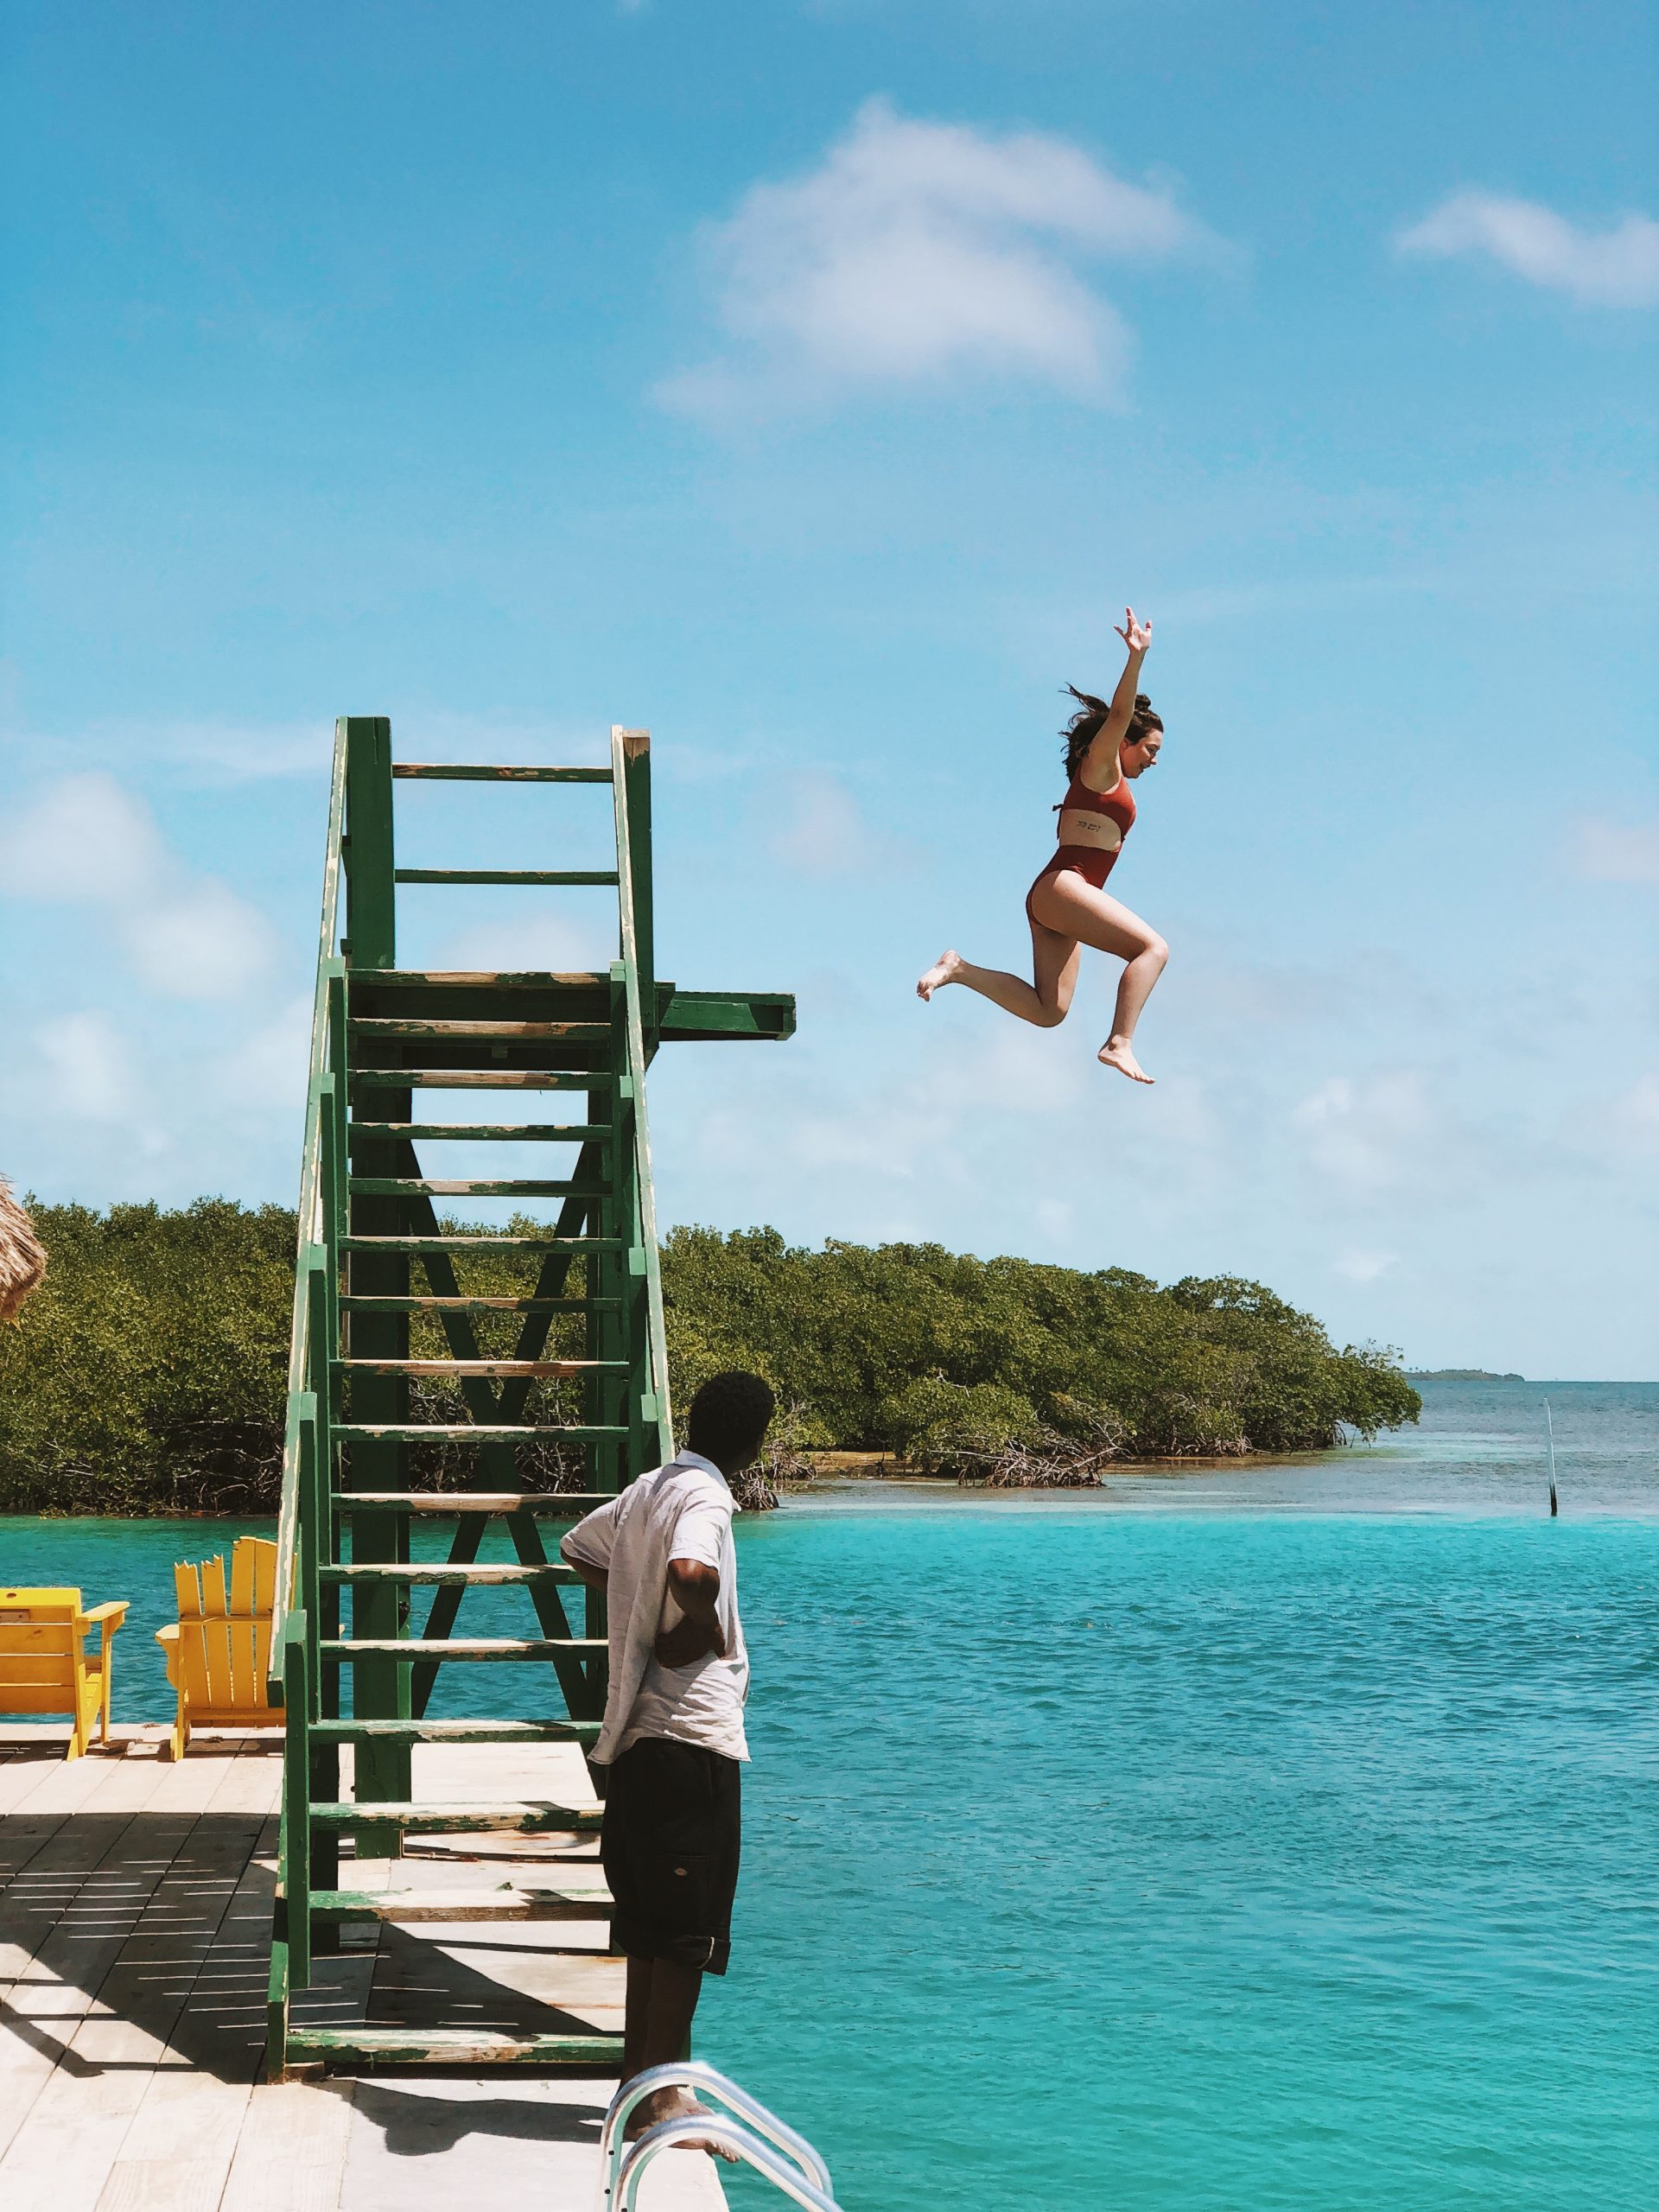 Girl jumping off ladder into ocean